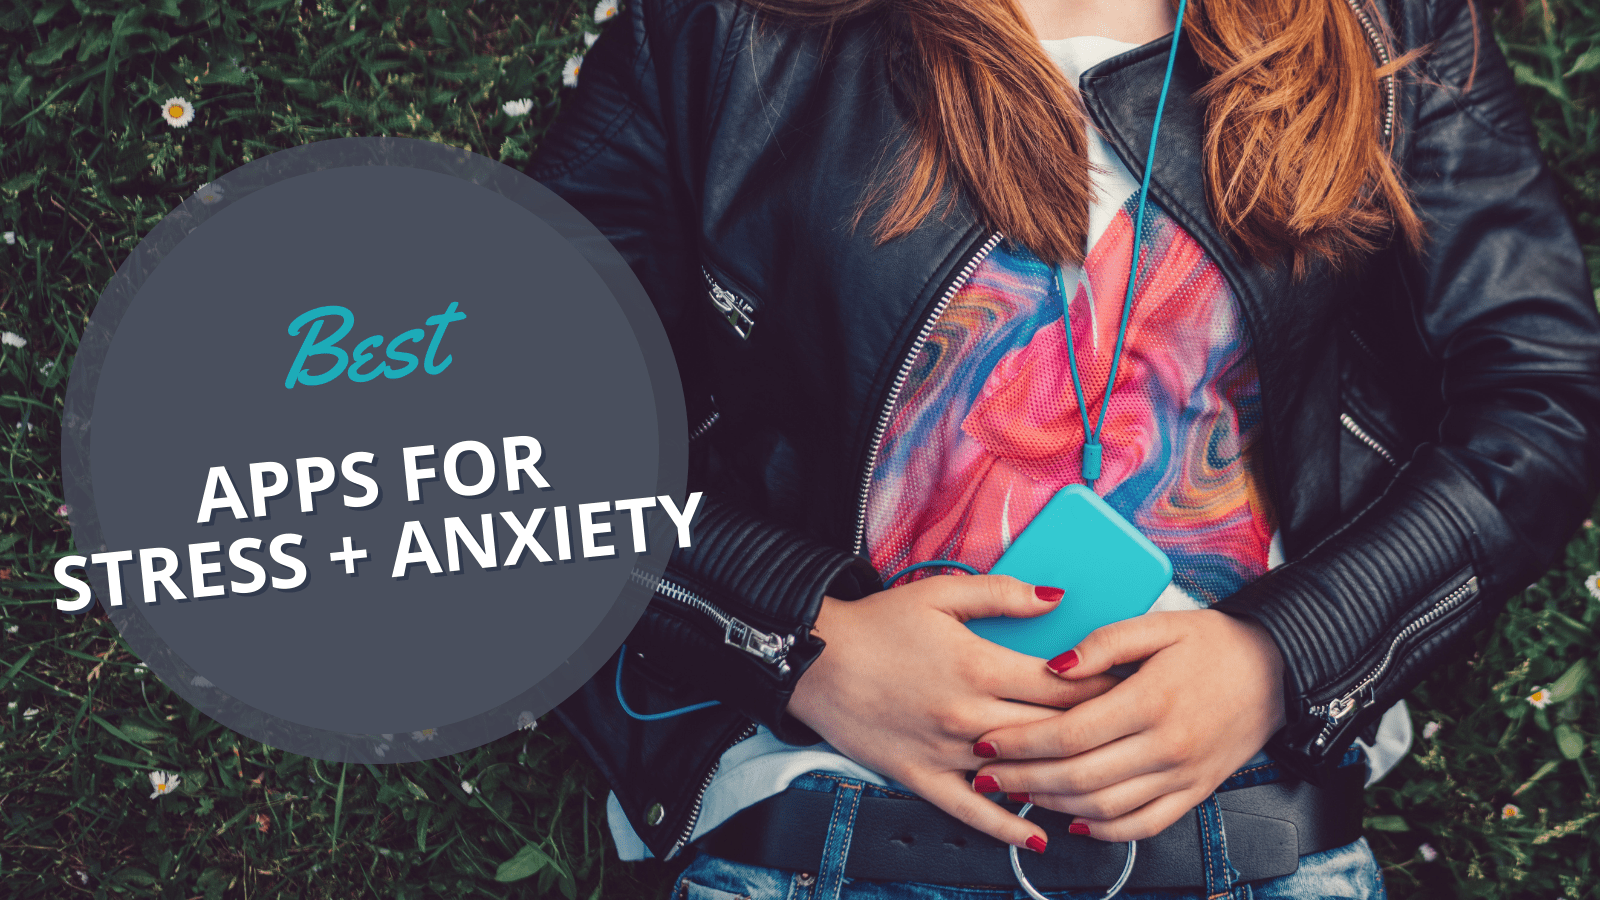  29 najboljih aplikacija za borbu protiv anksioznosti i smanjenje stresa